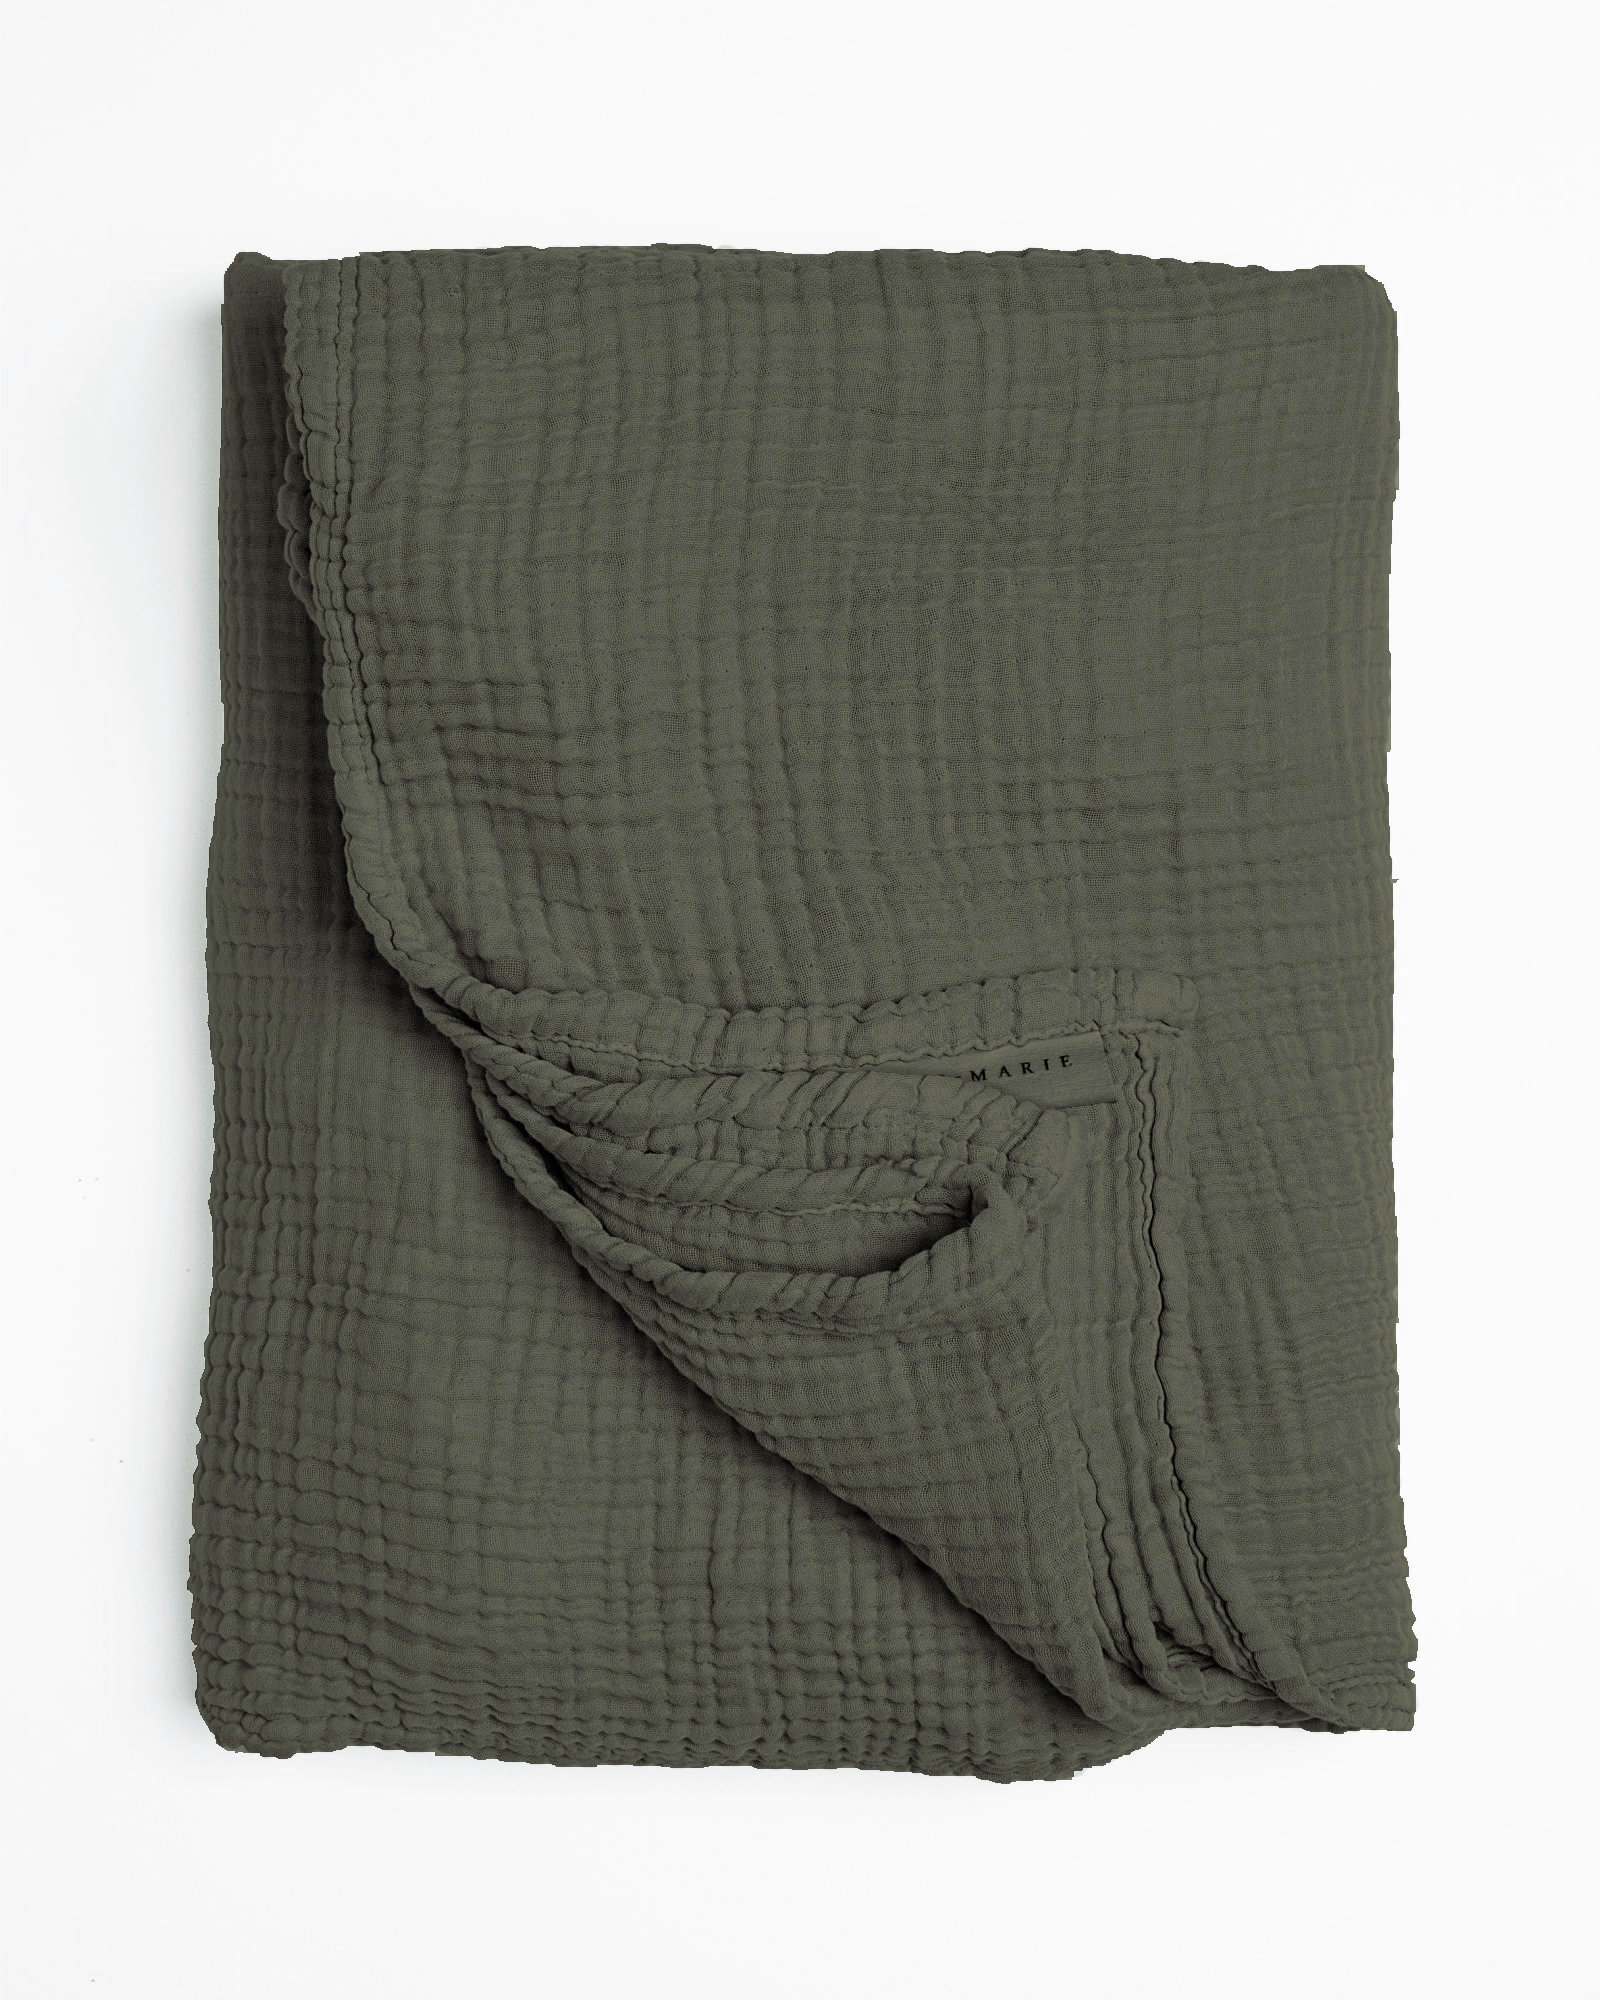 MARIE-MARIE - Bedspread VINTAGE COTTON Khaki Green - 160x240 cm - Khaki Green